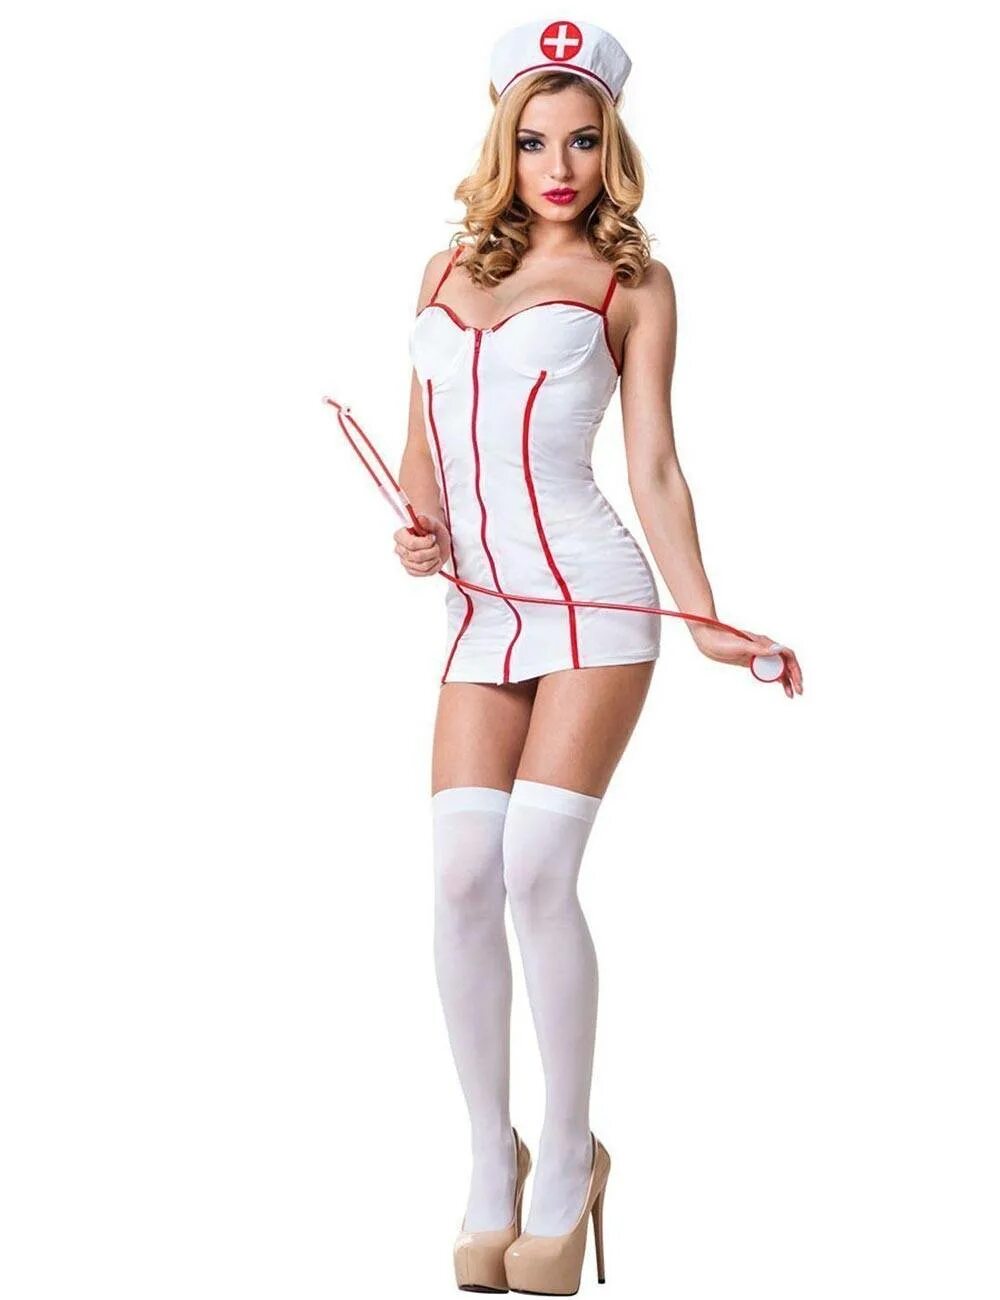 Le Frivole костюм медсестры. Костюм медсестра LXL (46-48). Костюм le Frivole 02206. Чувственная медсестра